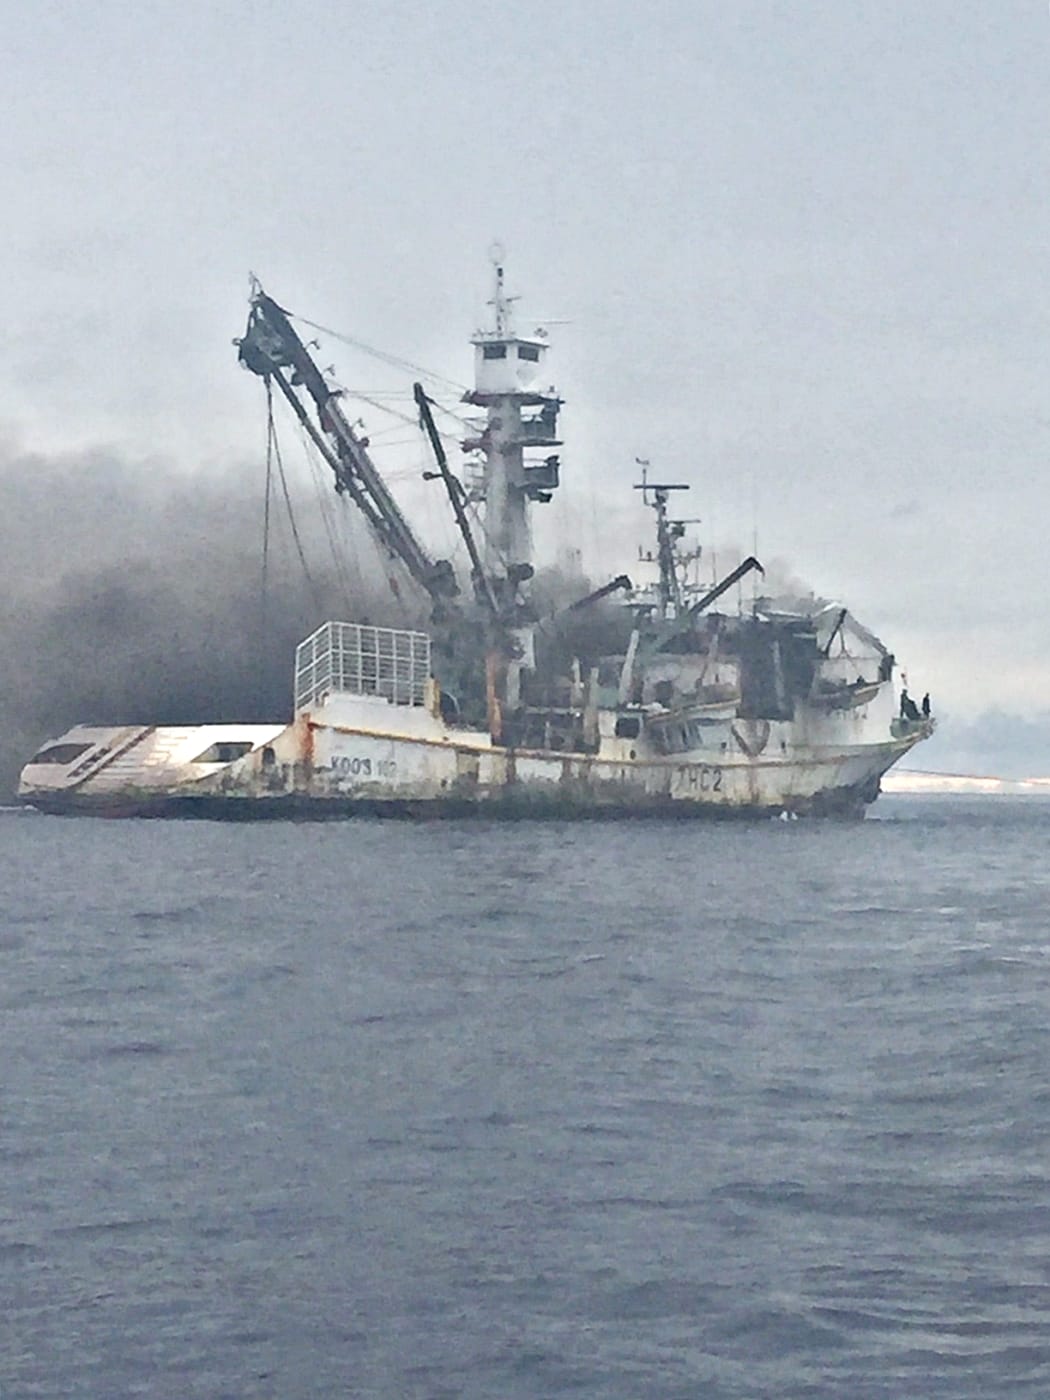 The Marshall Islands-flagged Koo's 102 purse seine fishing vessel caught fire in Majuro lagoon on Sunday